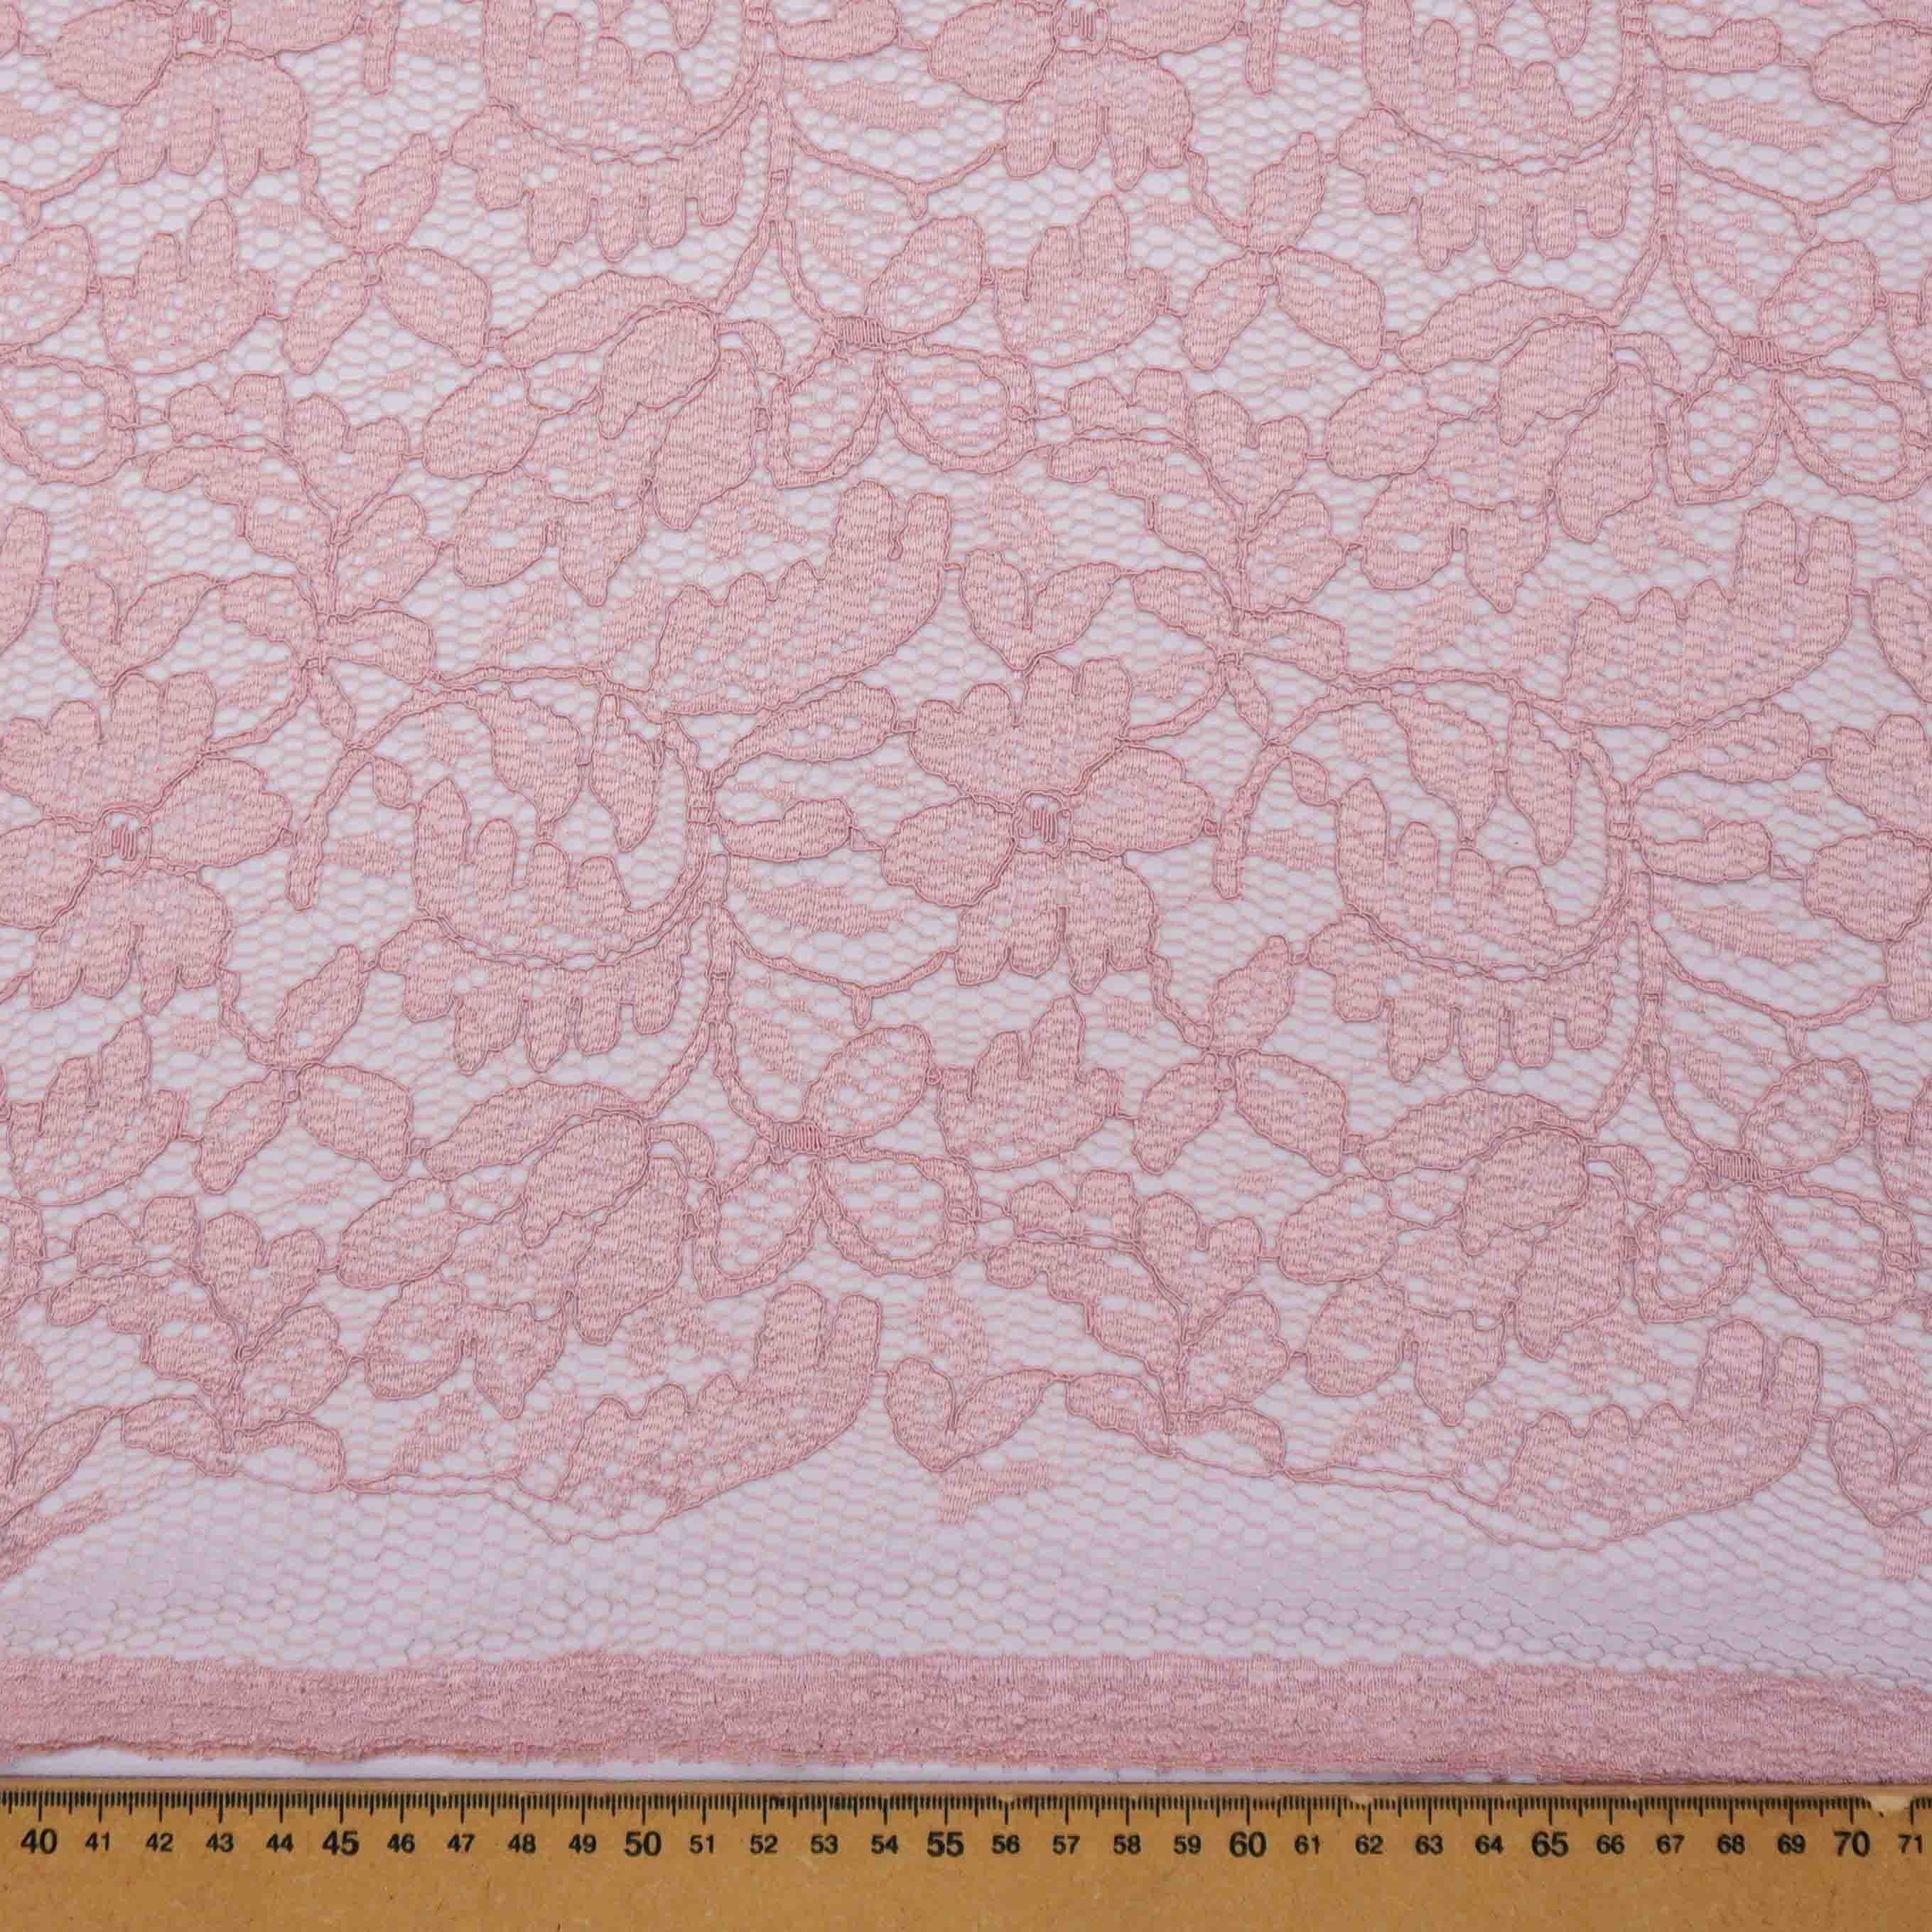 Tecido renda bordada cordonê rosê und 55cm x 150cm